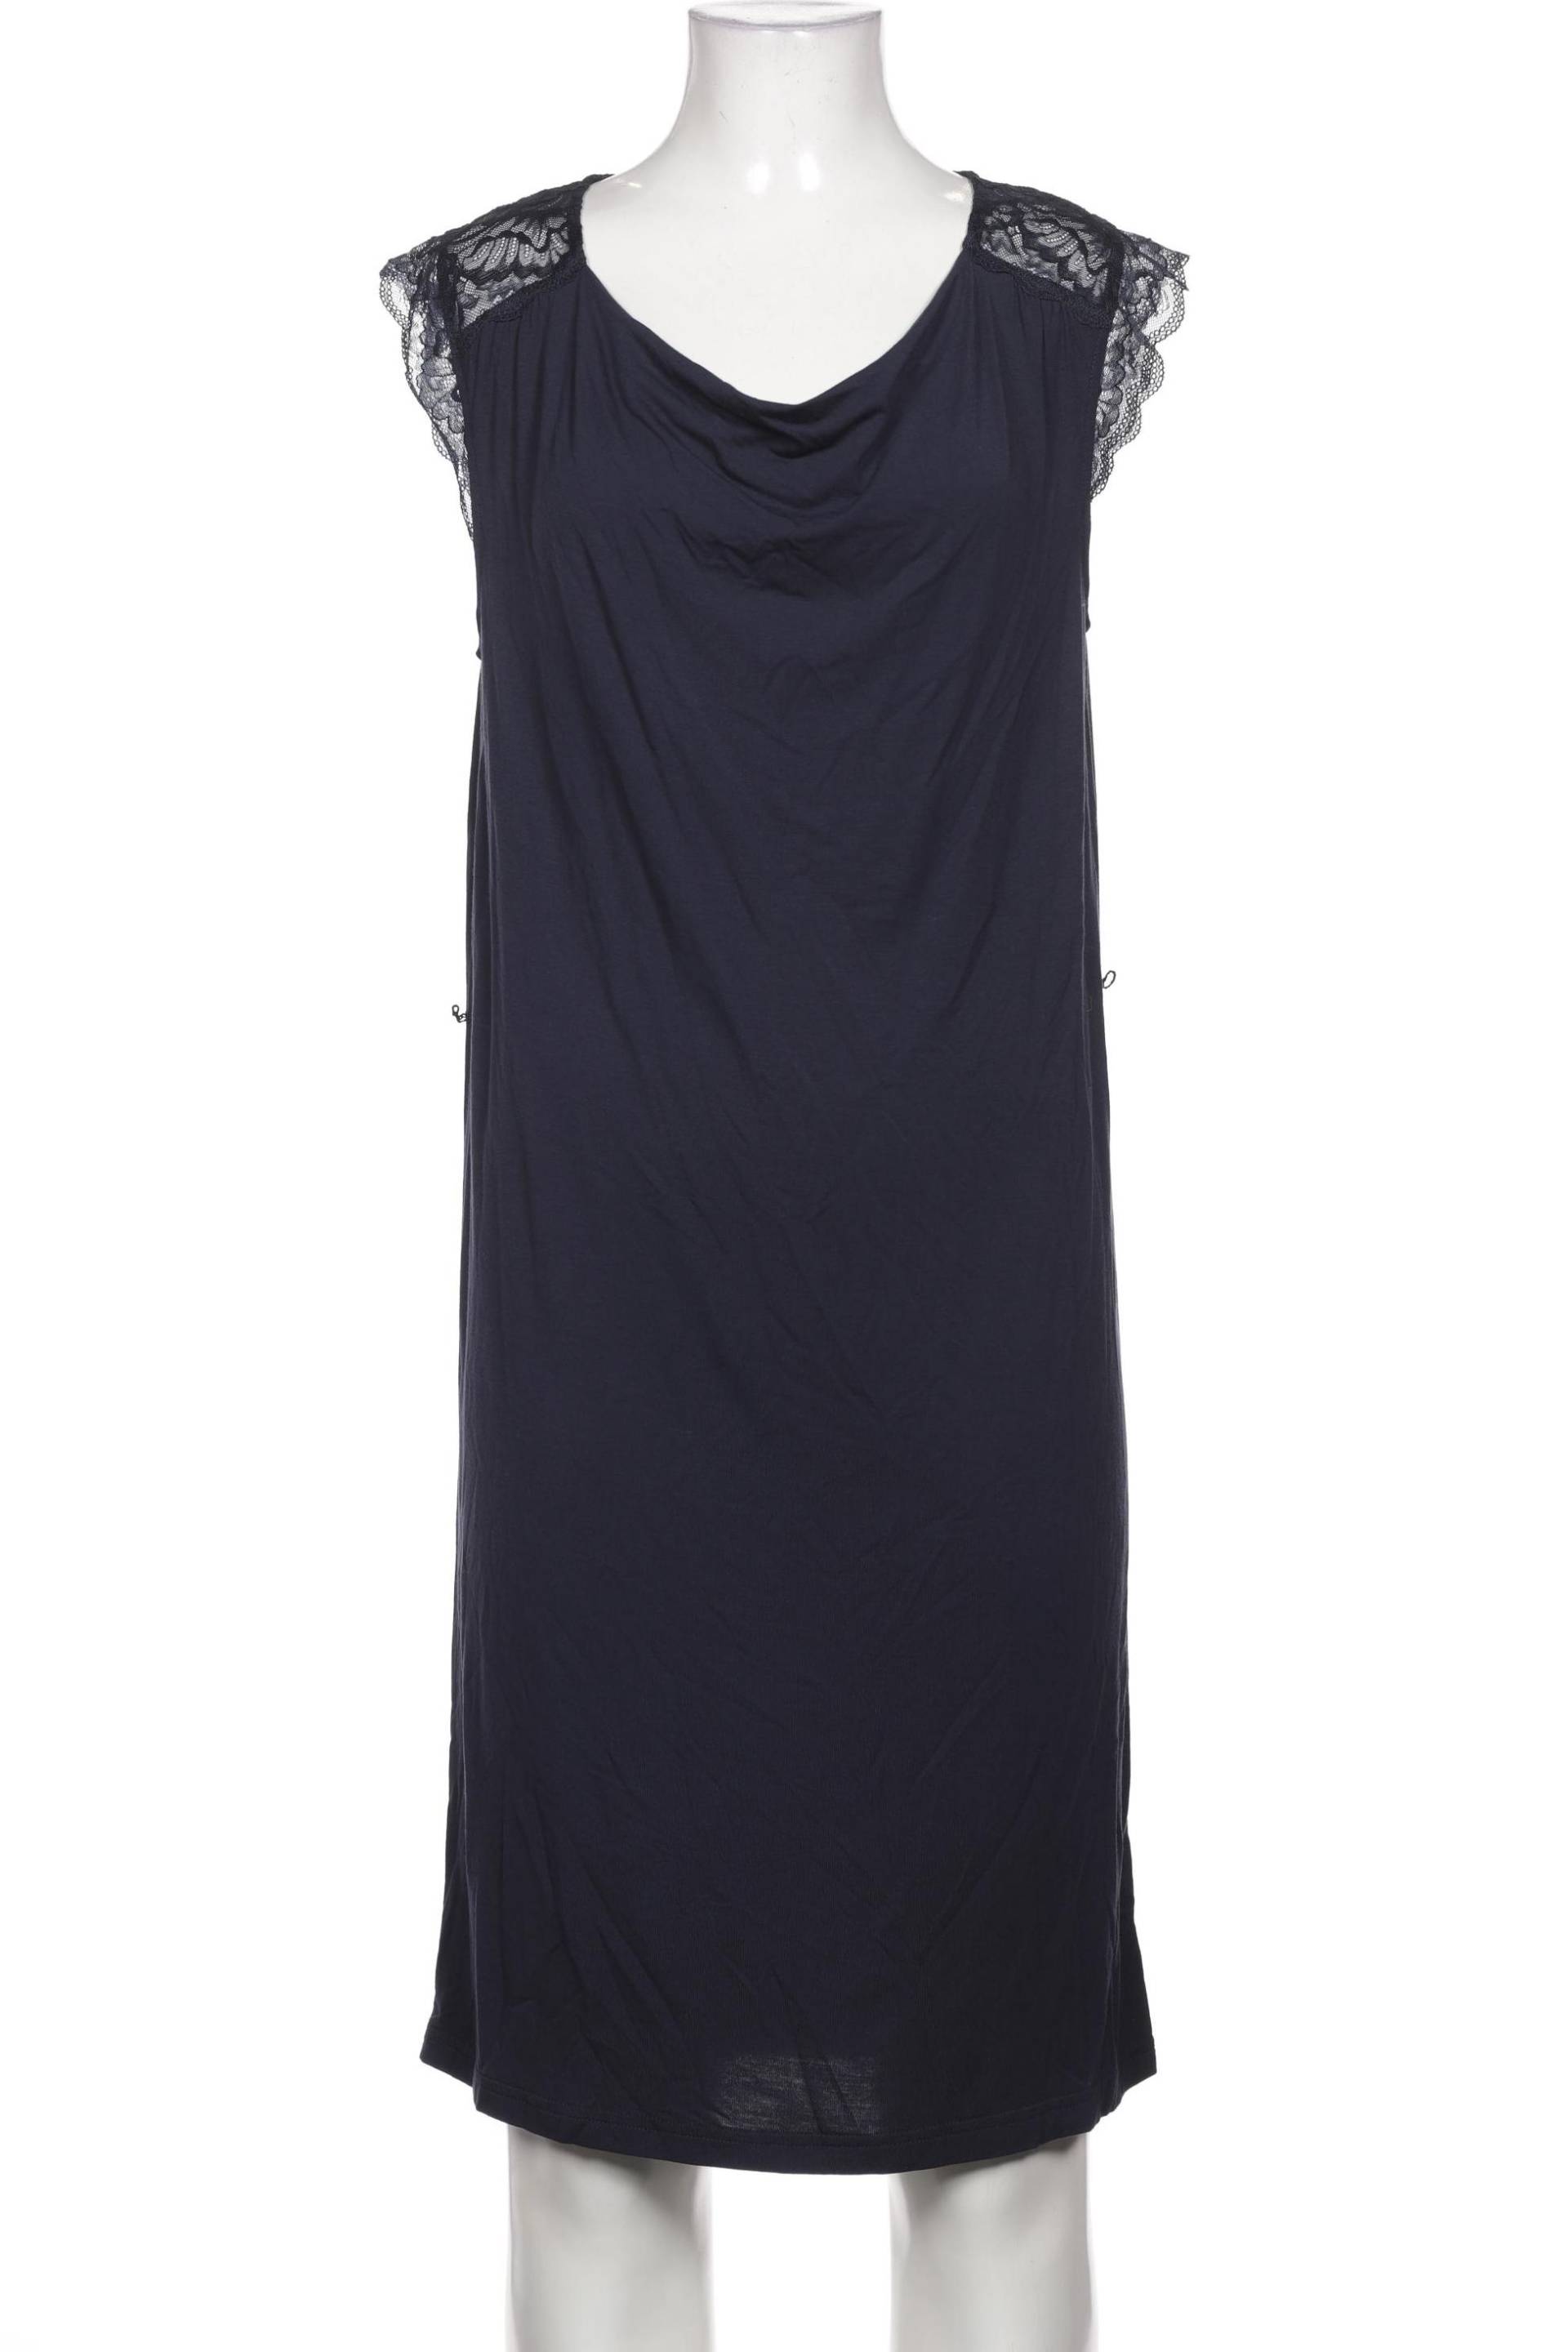 Rosemunde Damen Kleid, marineblau von Rosemunde